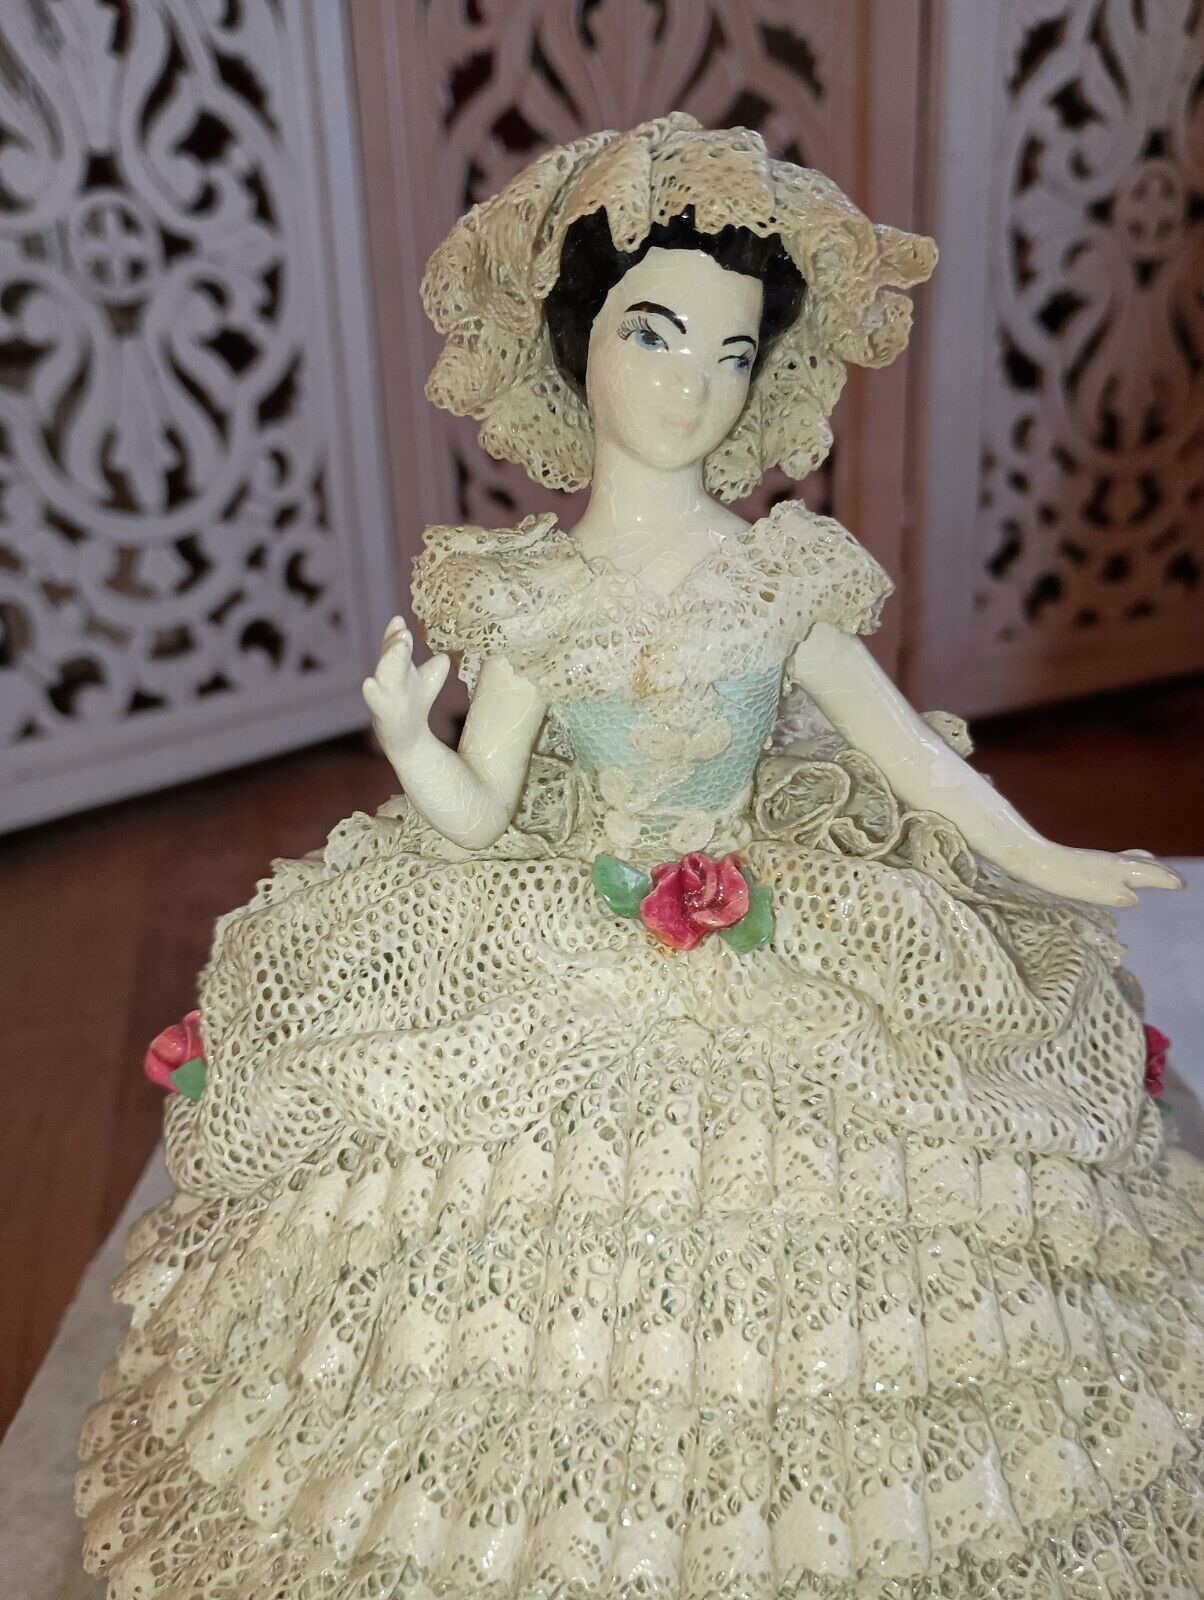  Vintage Dresden lace woman figurine